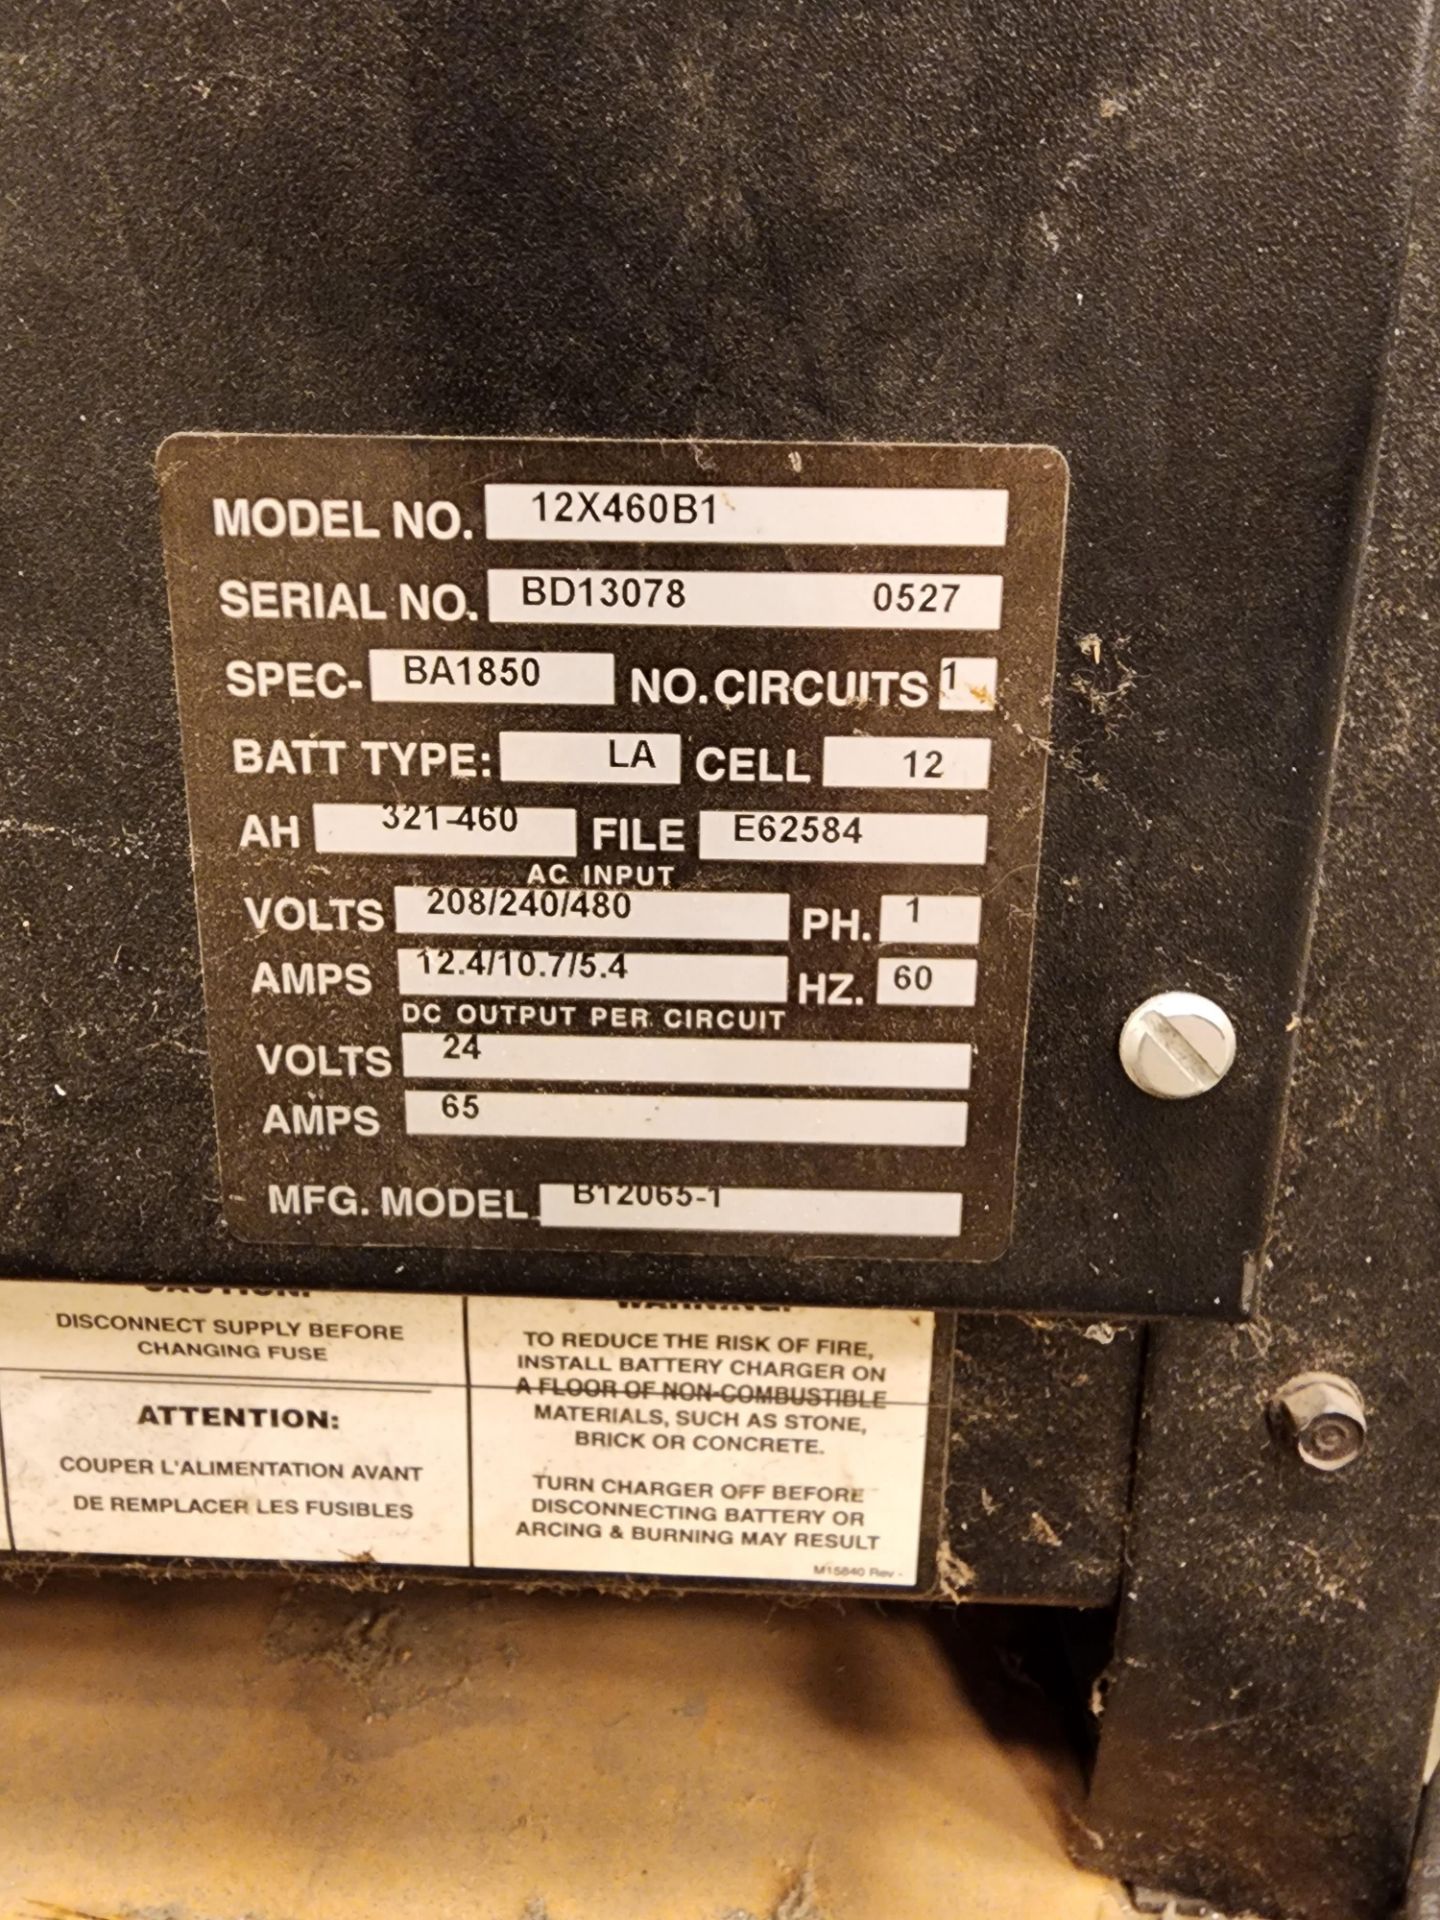 V-Mariotti Model 12X460B1 Forklift Battery Charger - Image 3 of 8